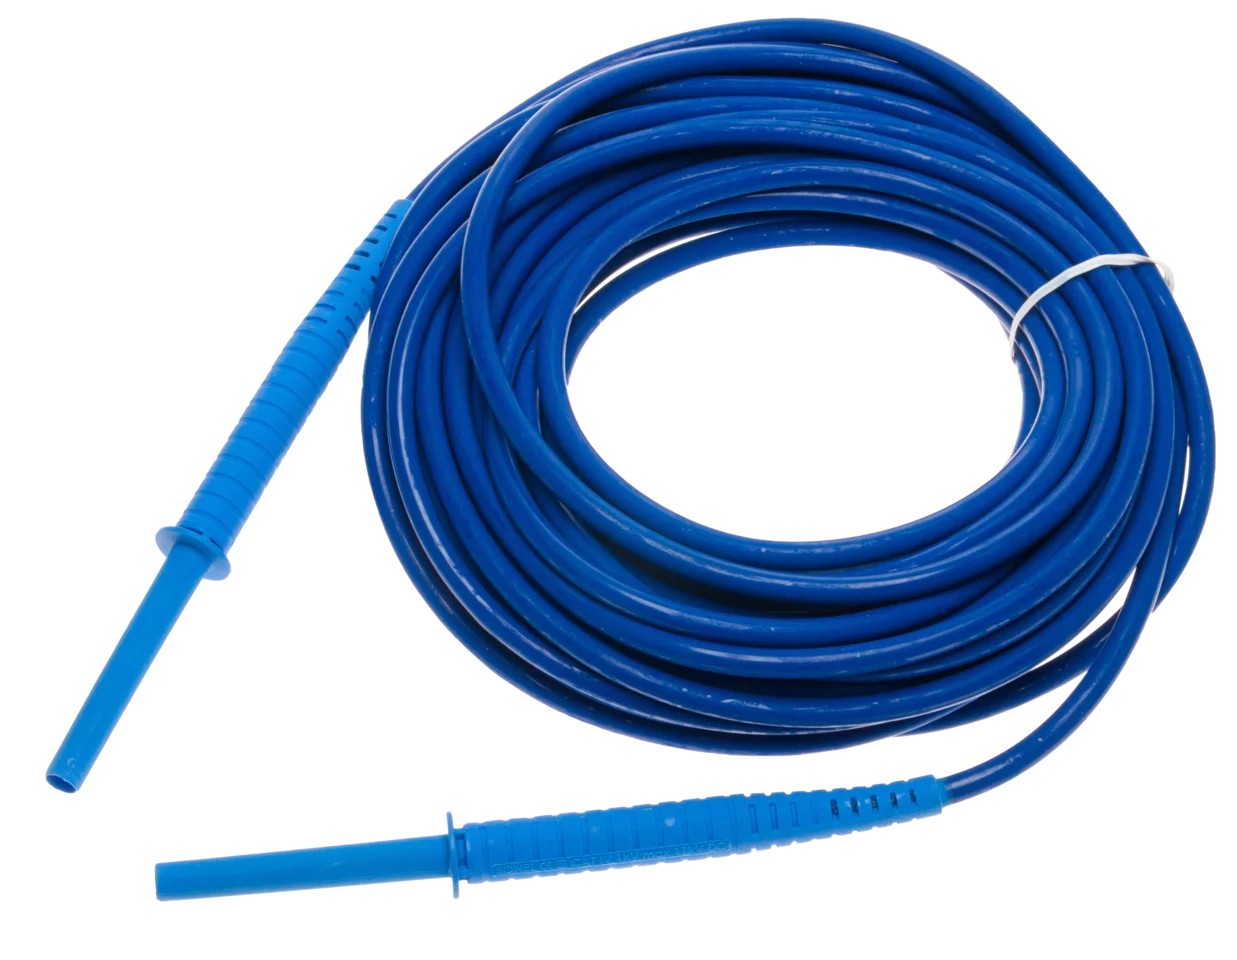 Test lead 15 m blue 10 kV with banana plugs